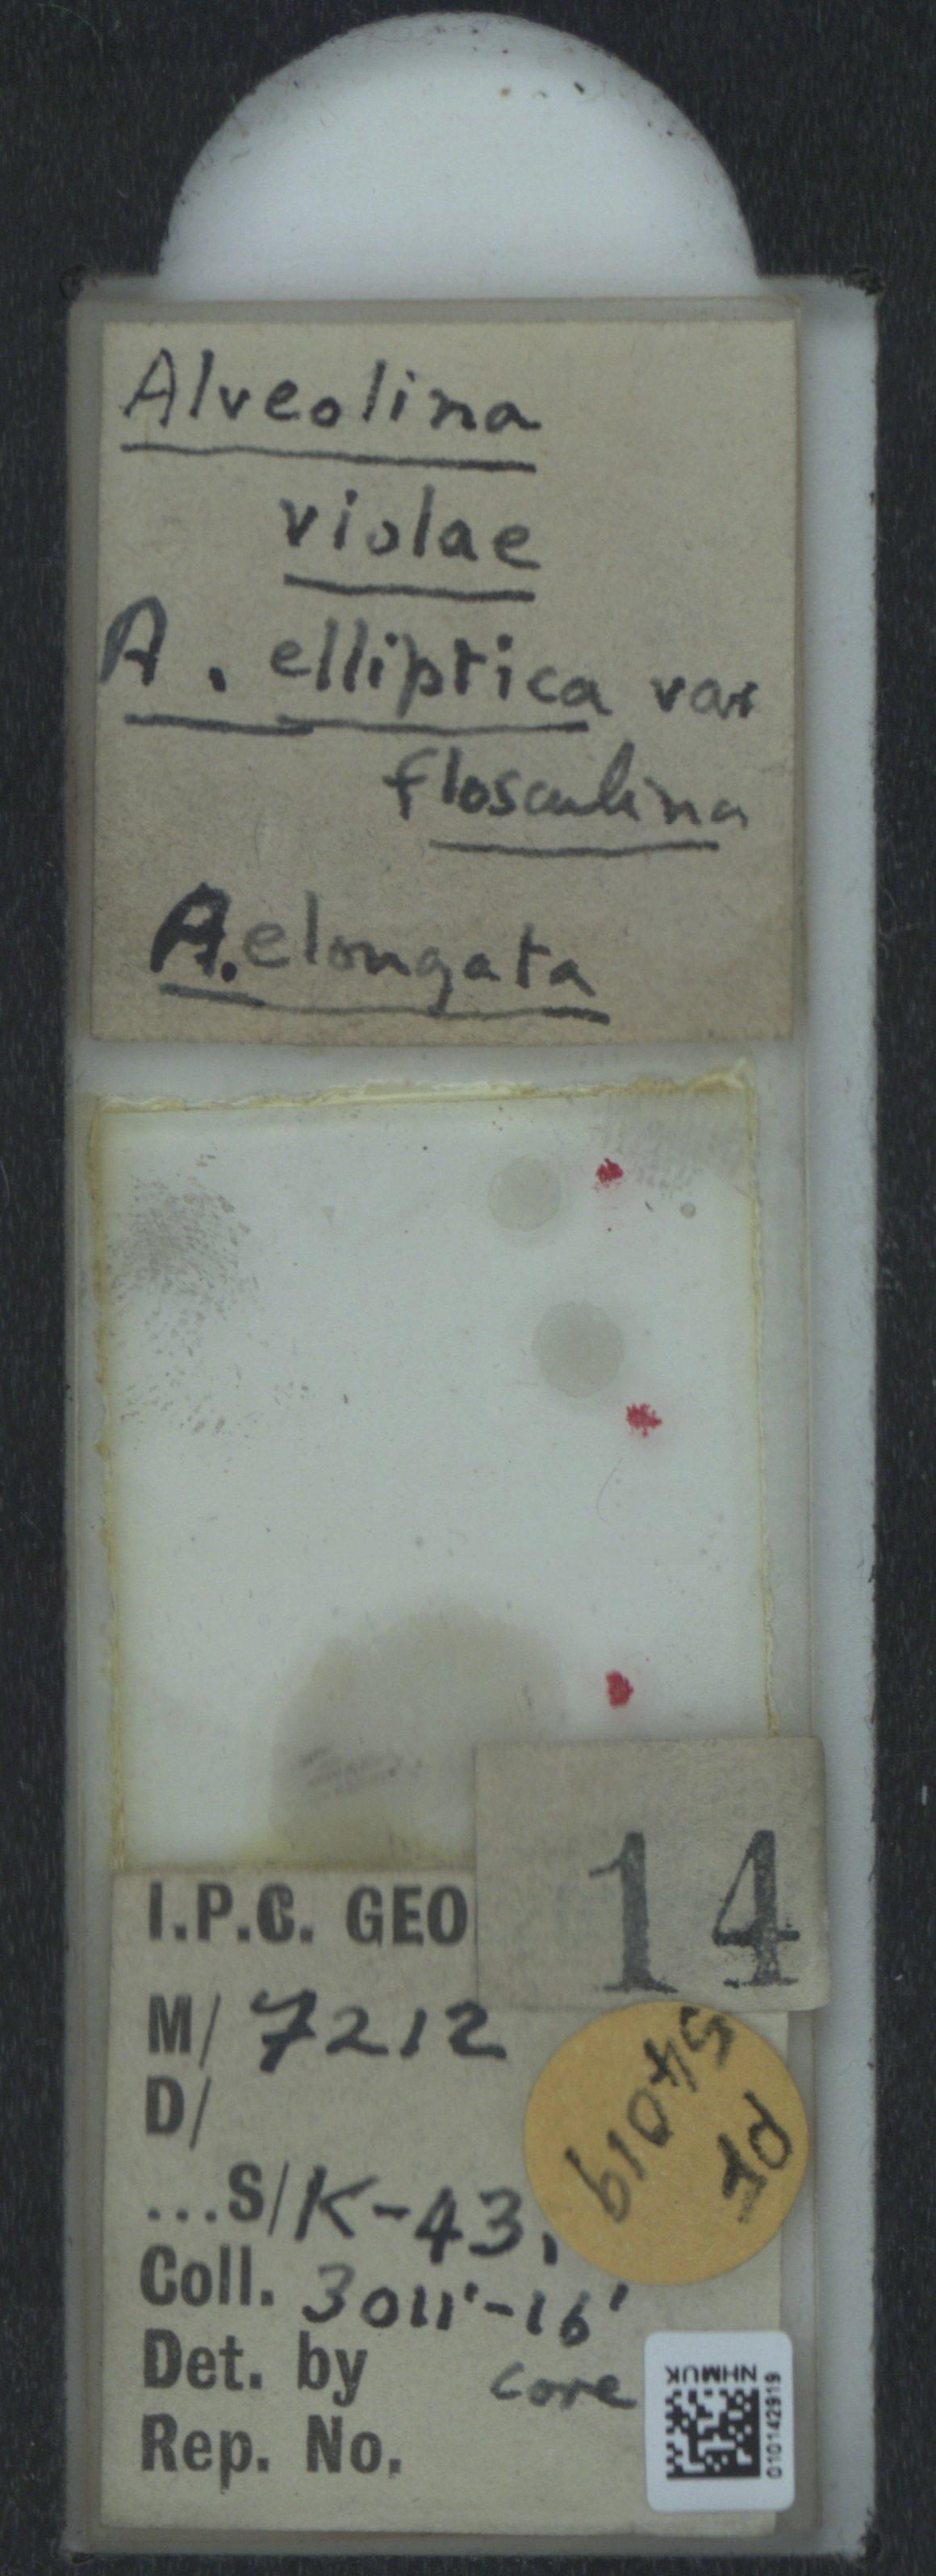 To NHMUK collection (Alveolina violae Cheechia-Rispoli, 1905; NHMUK:ecatalogue:2031515)